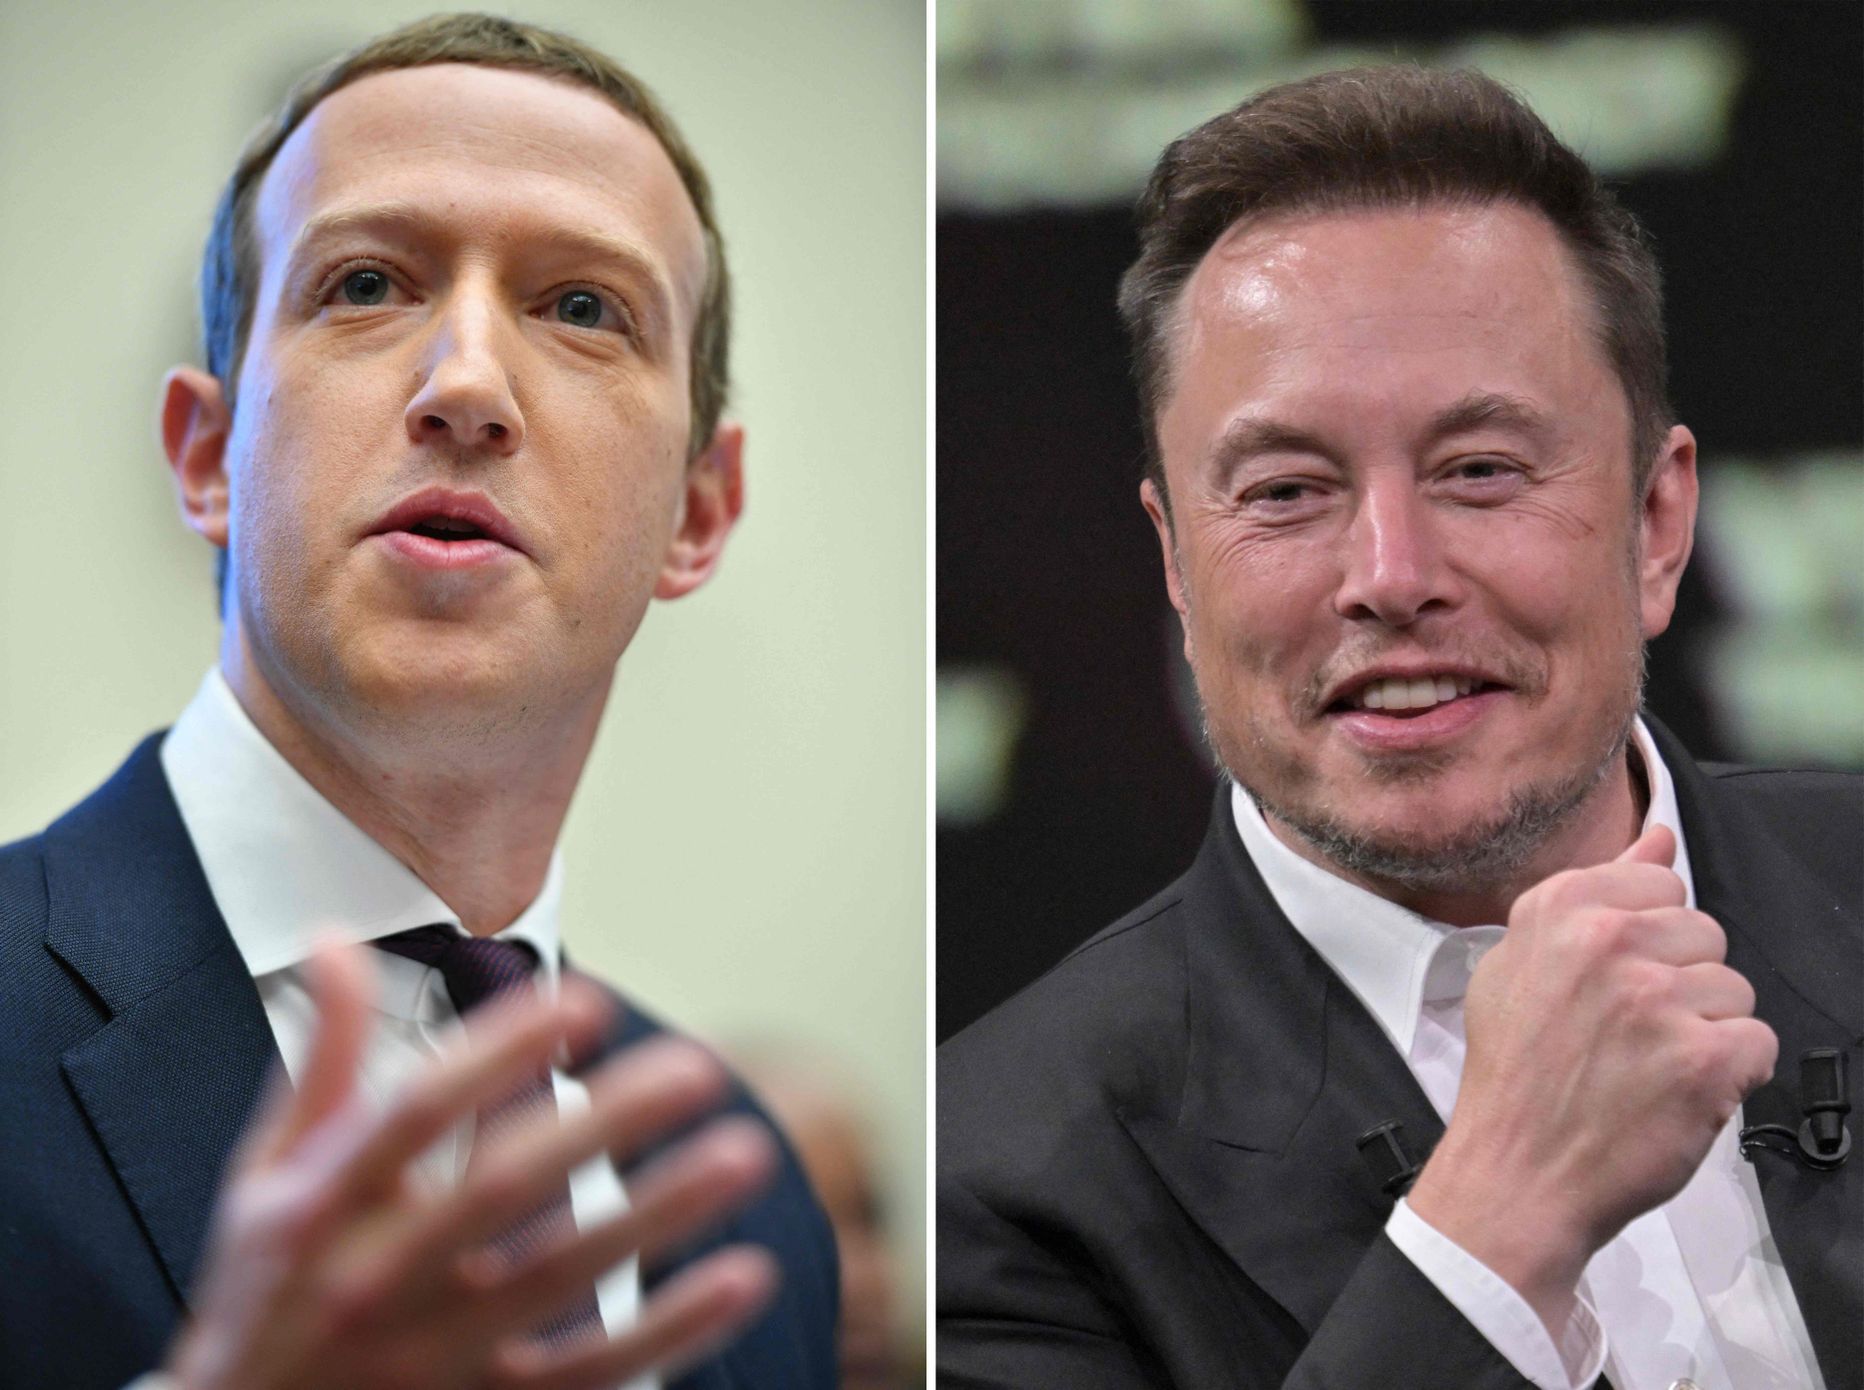 Mark Zukerberg versus Elon Musk.